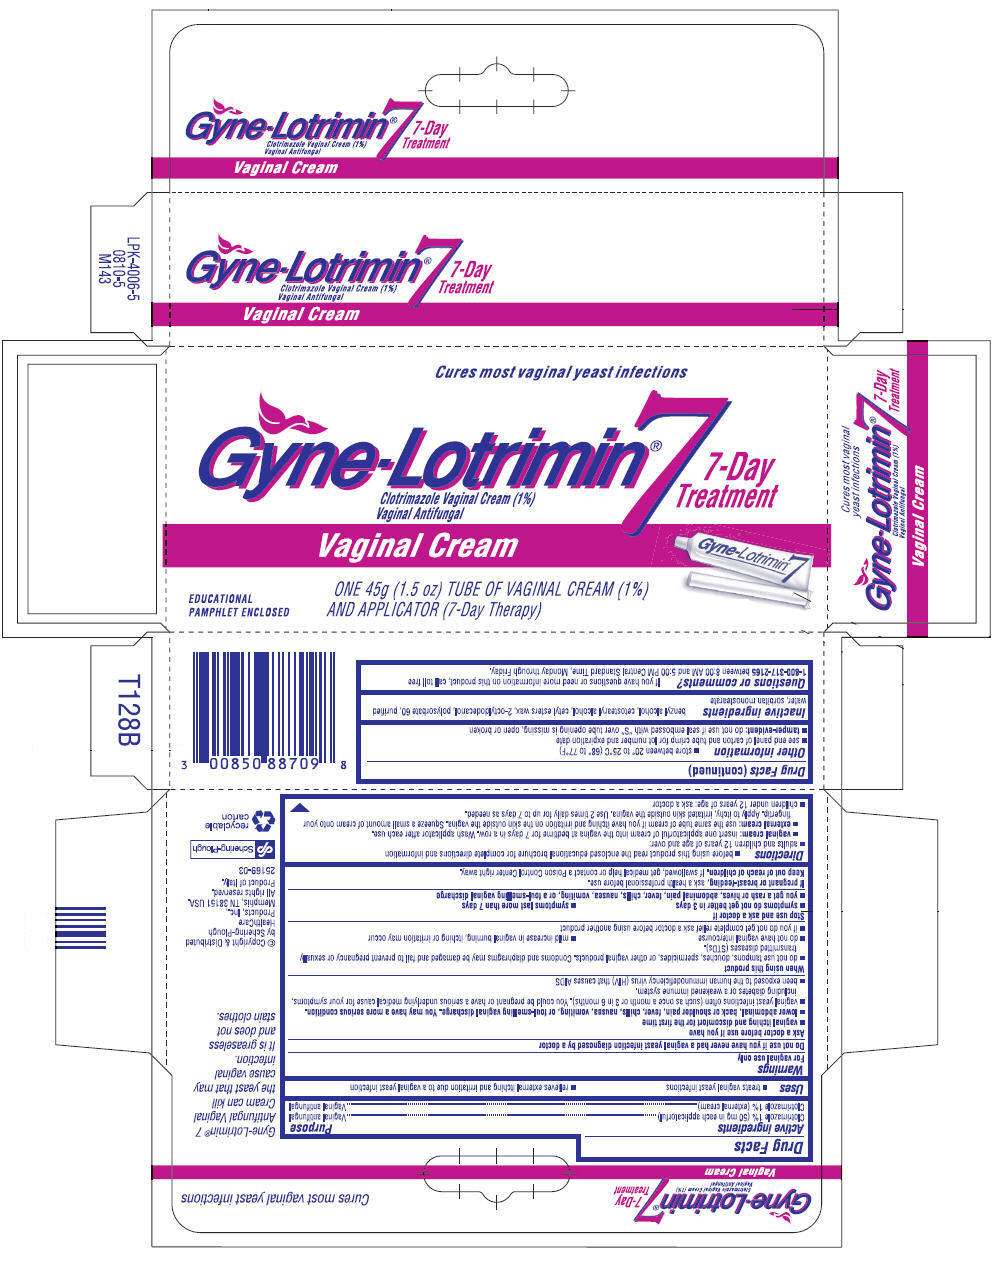 Gyne-Lotrimin 7